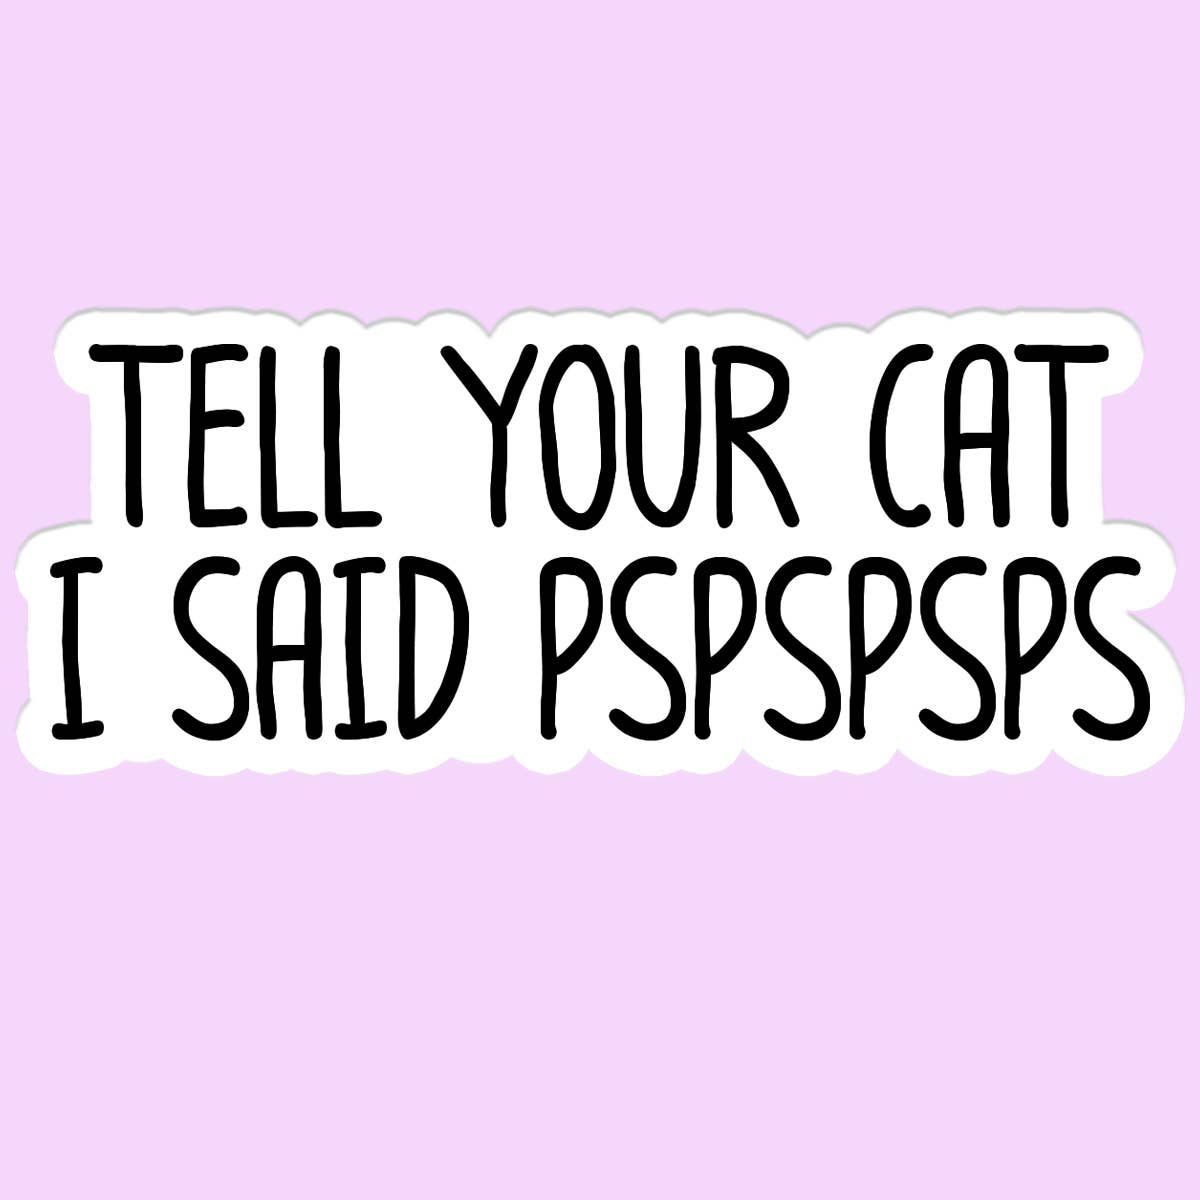 Sticker-Cat-22:Tell Your Cat I said PSPSPS